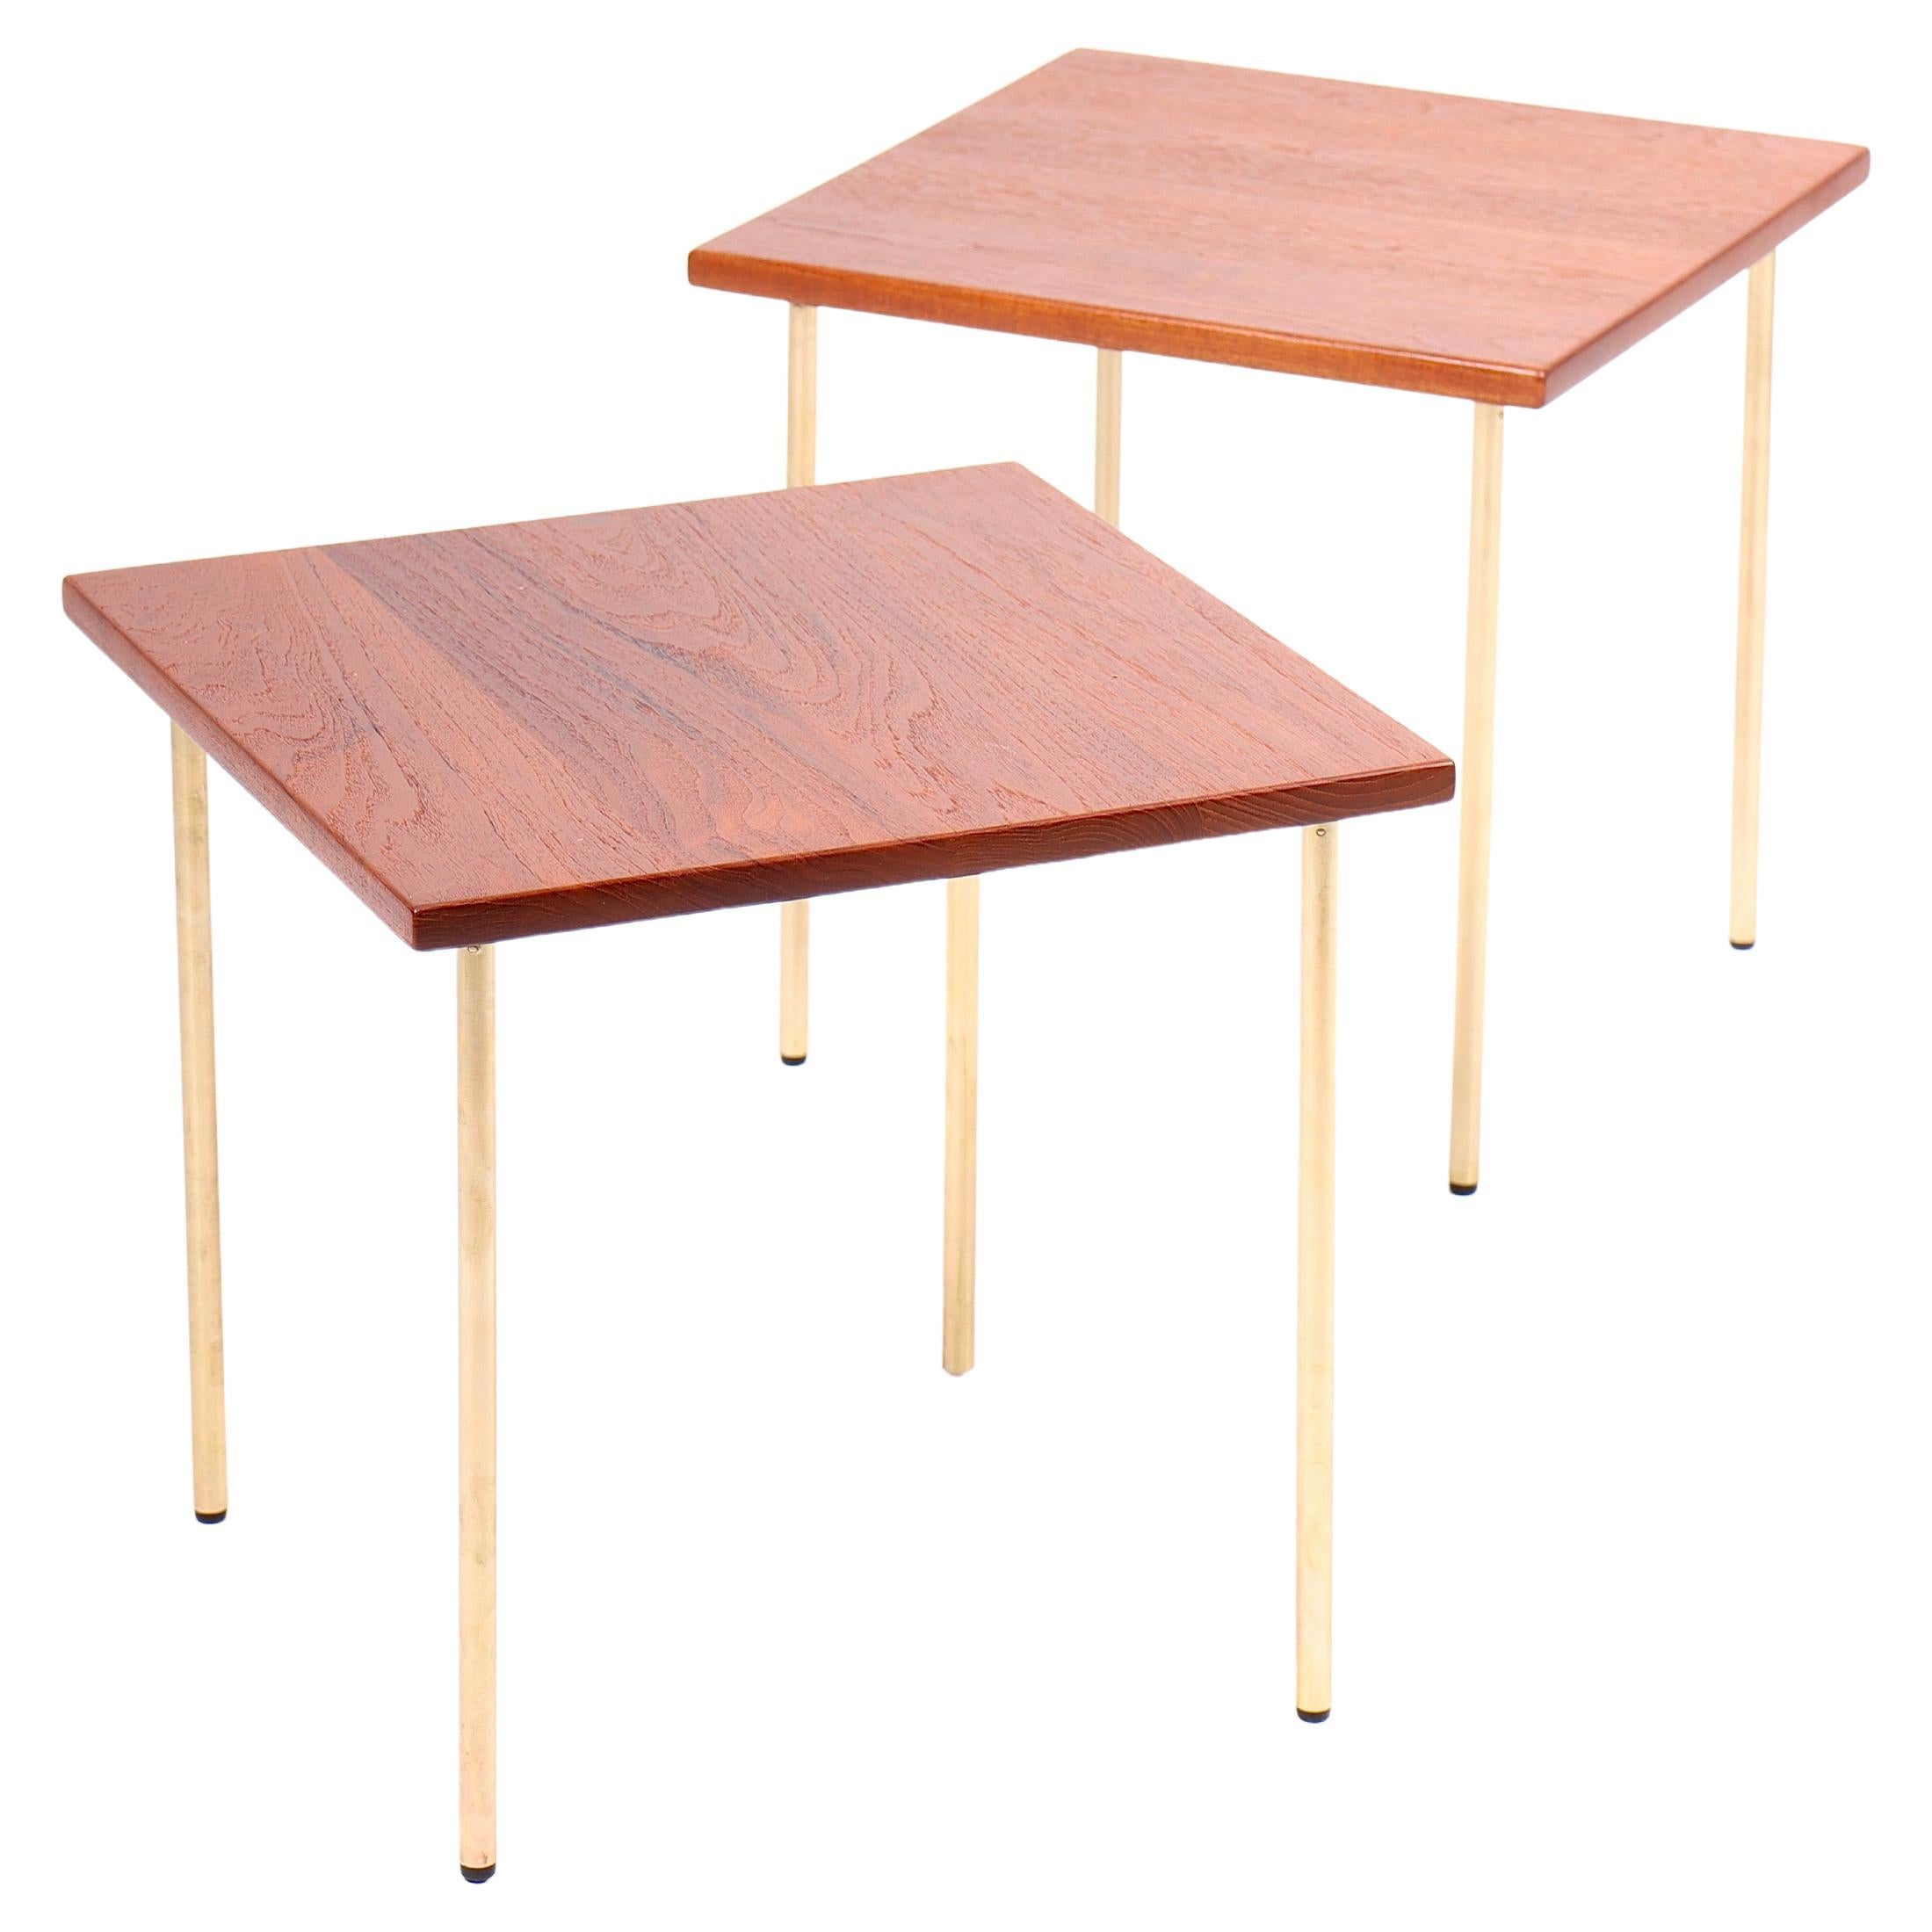 Pair of Side Tables in Solid Teak by Hvidt & Mølgaard, Made in Denmark For Sale